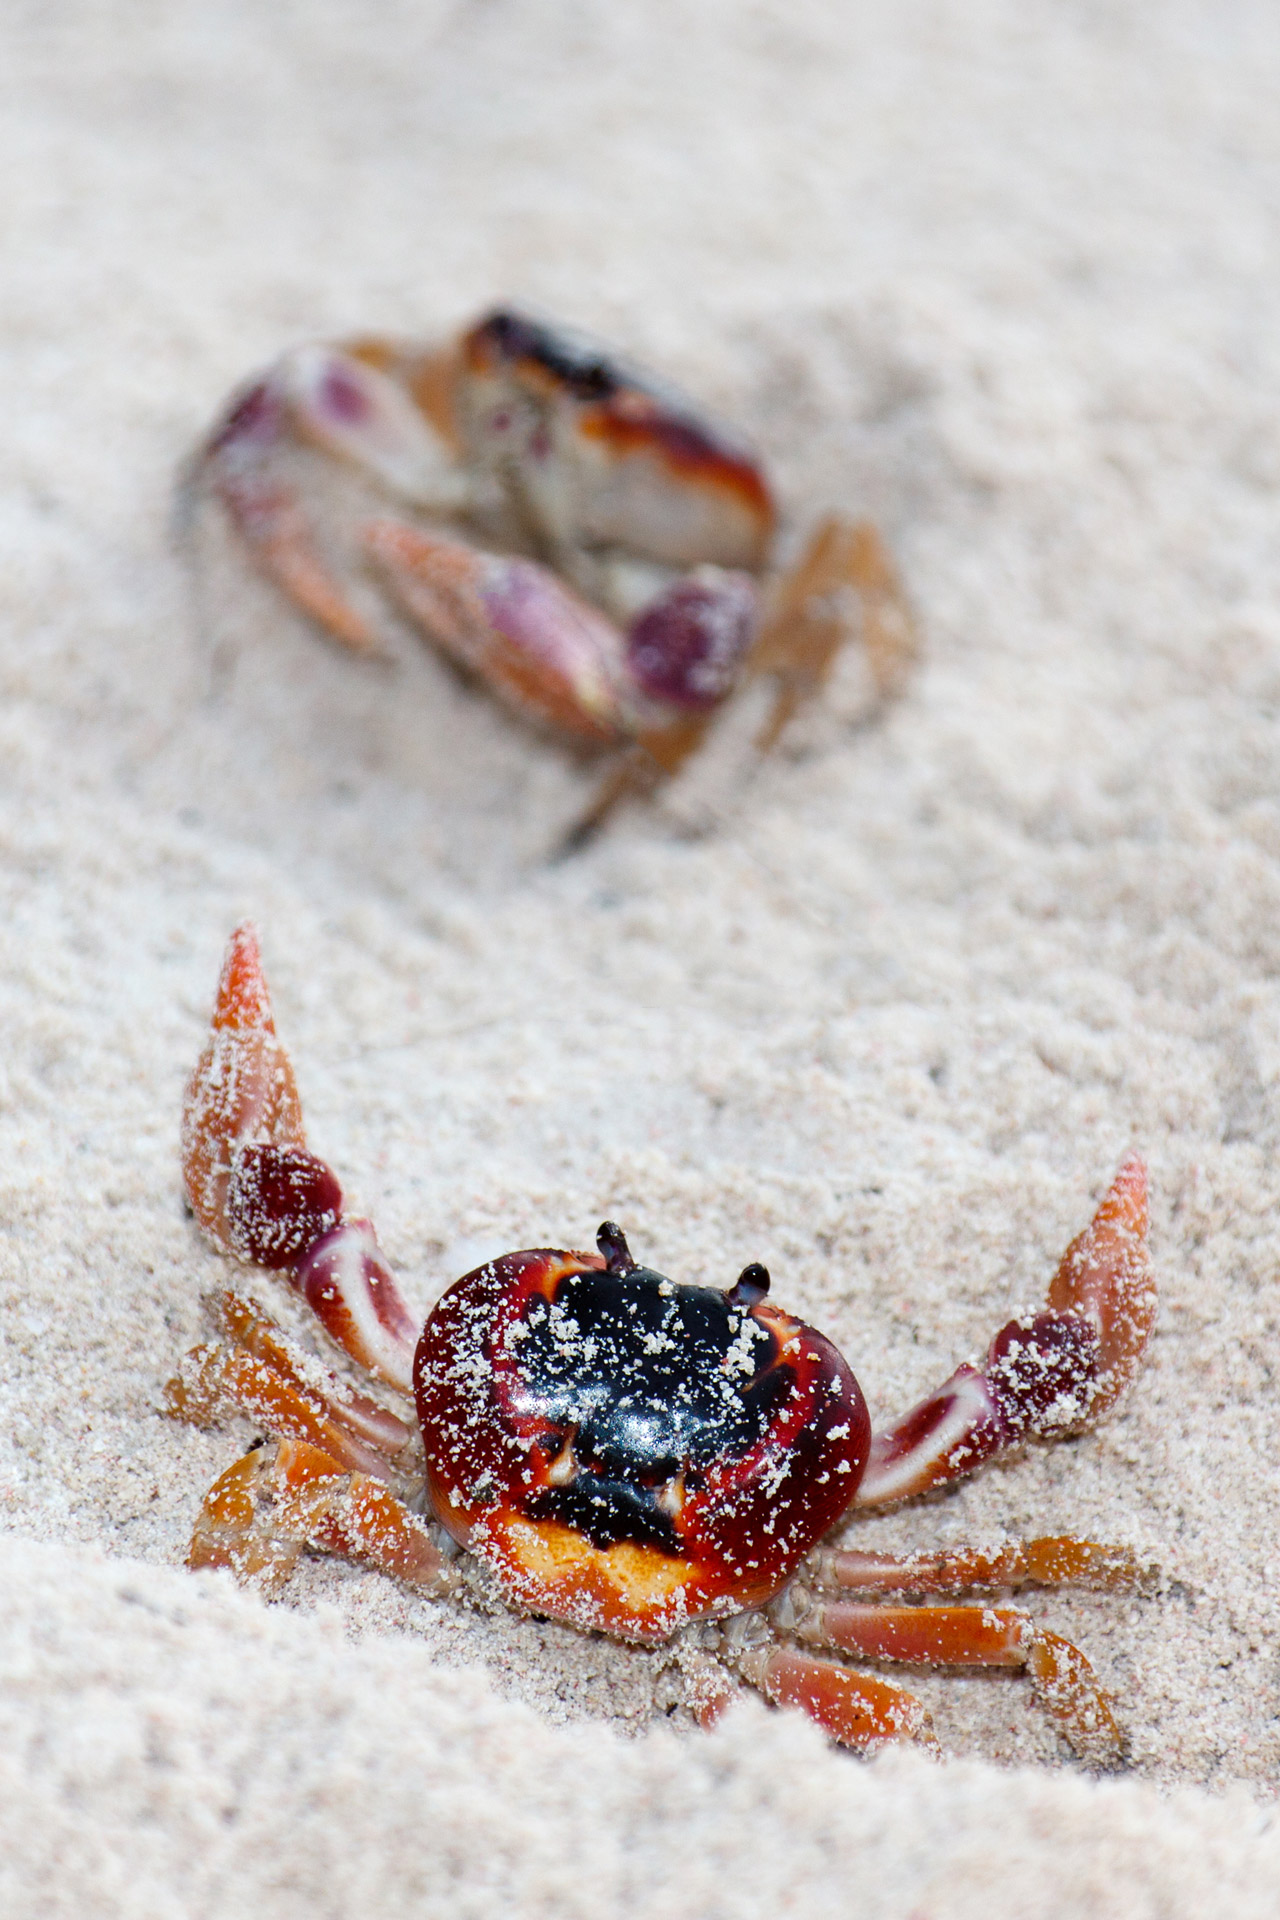 crab animal marine free photo